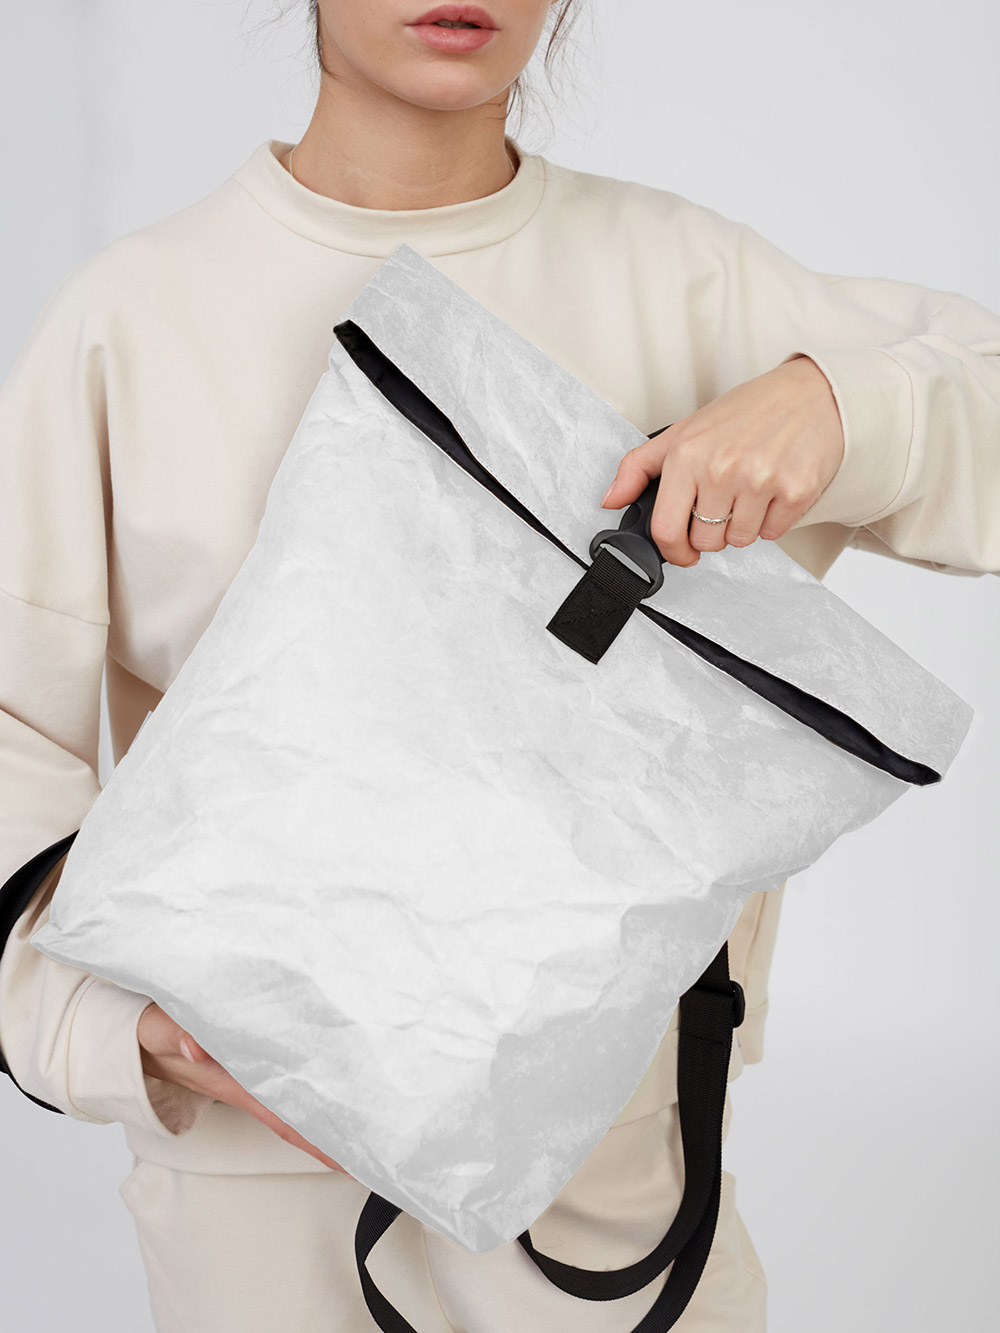 Рюкзак Rolly Kraft White картинка крафт-сумки